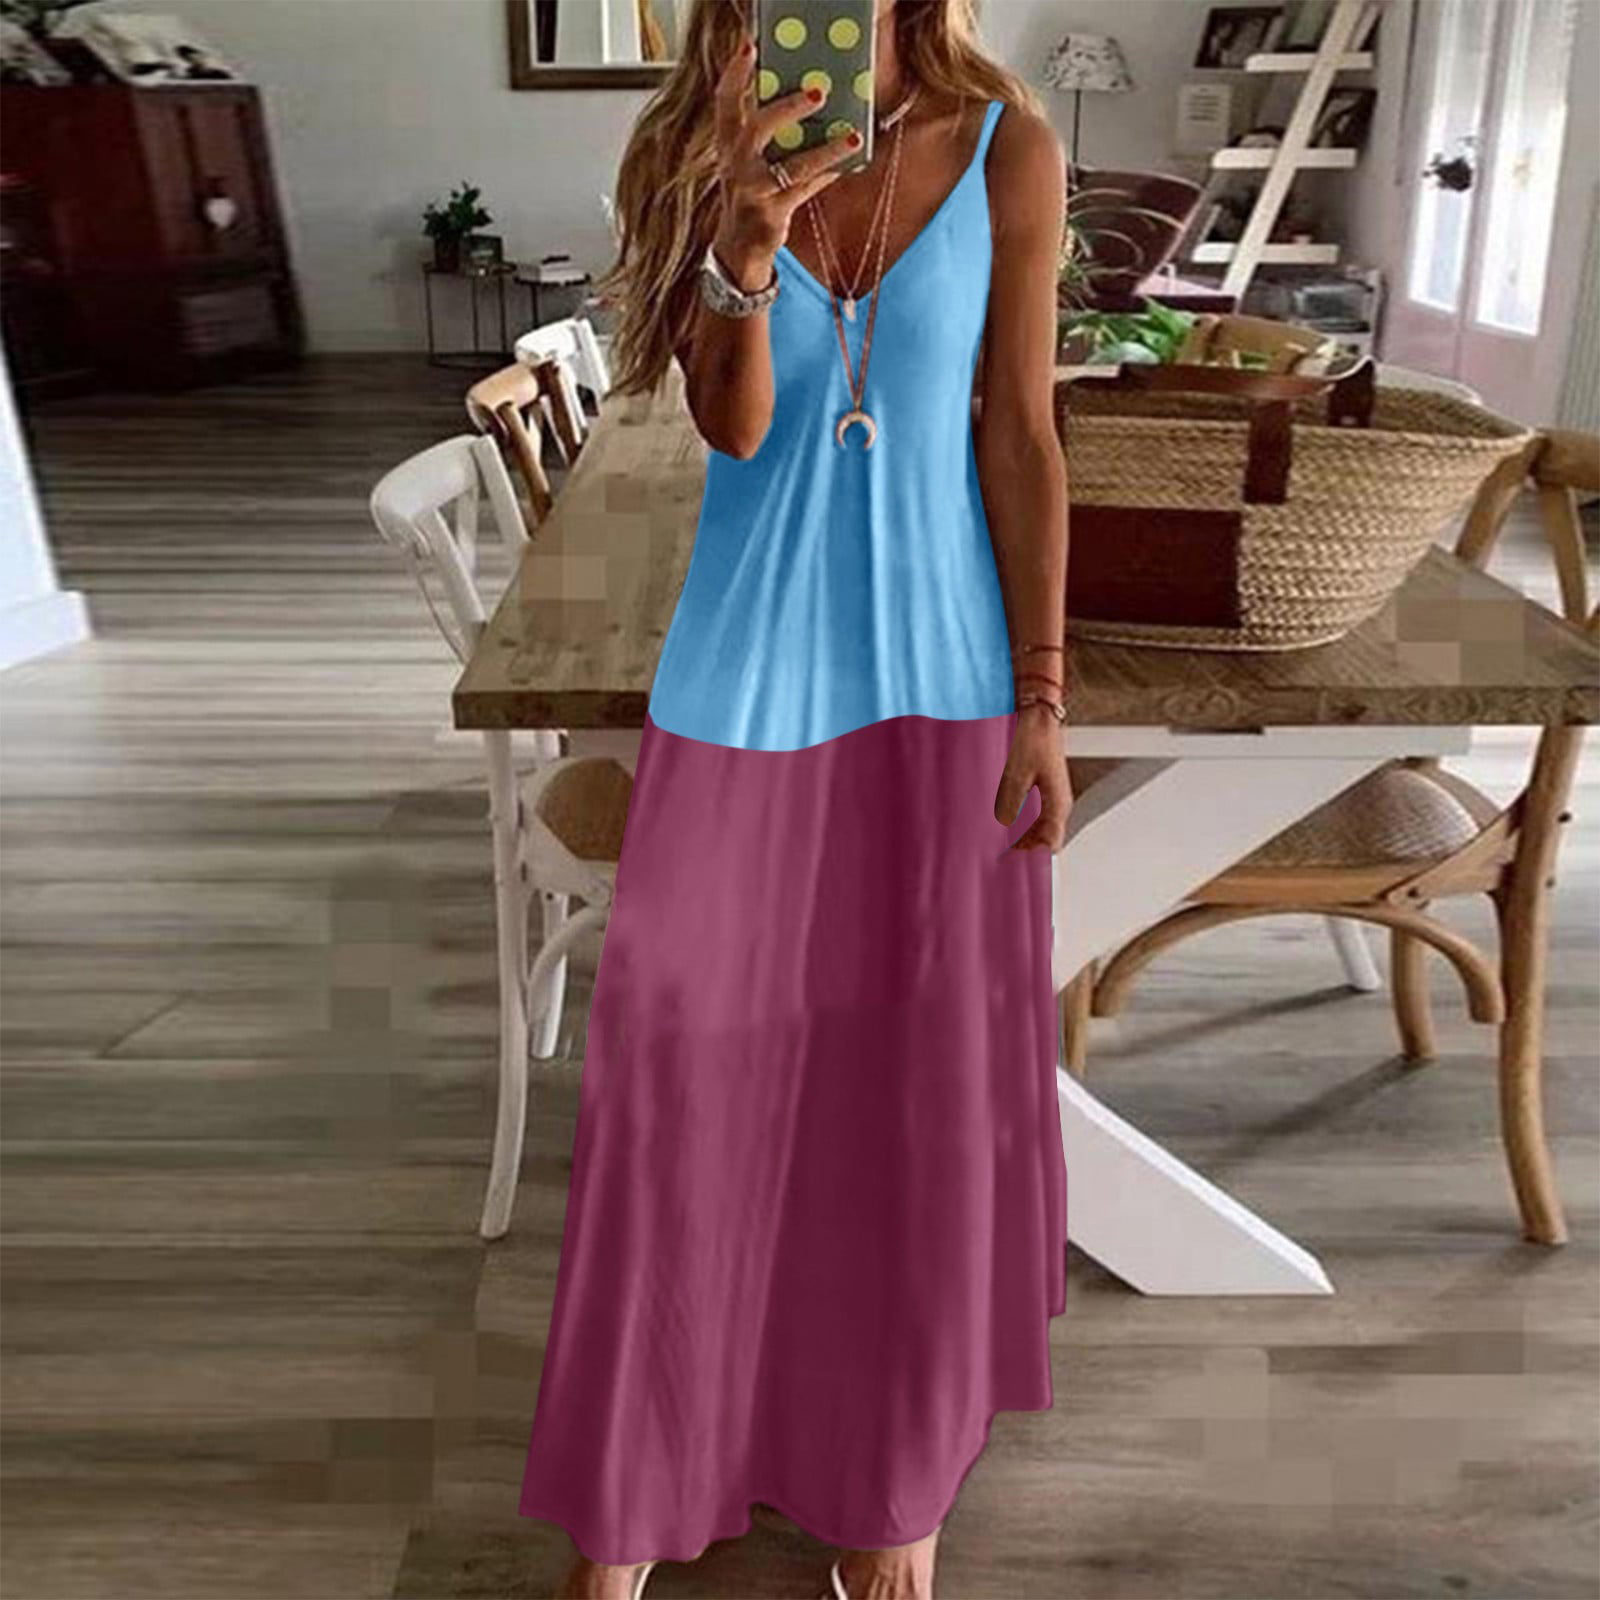 LaziesBoy Dresses for Women Casual Women's Gradient V Neck Long Maxi Dress Sleeveless Plus Size Summer Party Cami Long Dress 